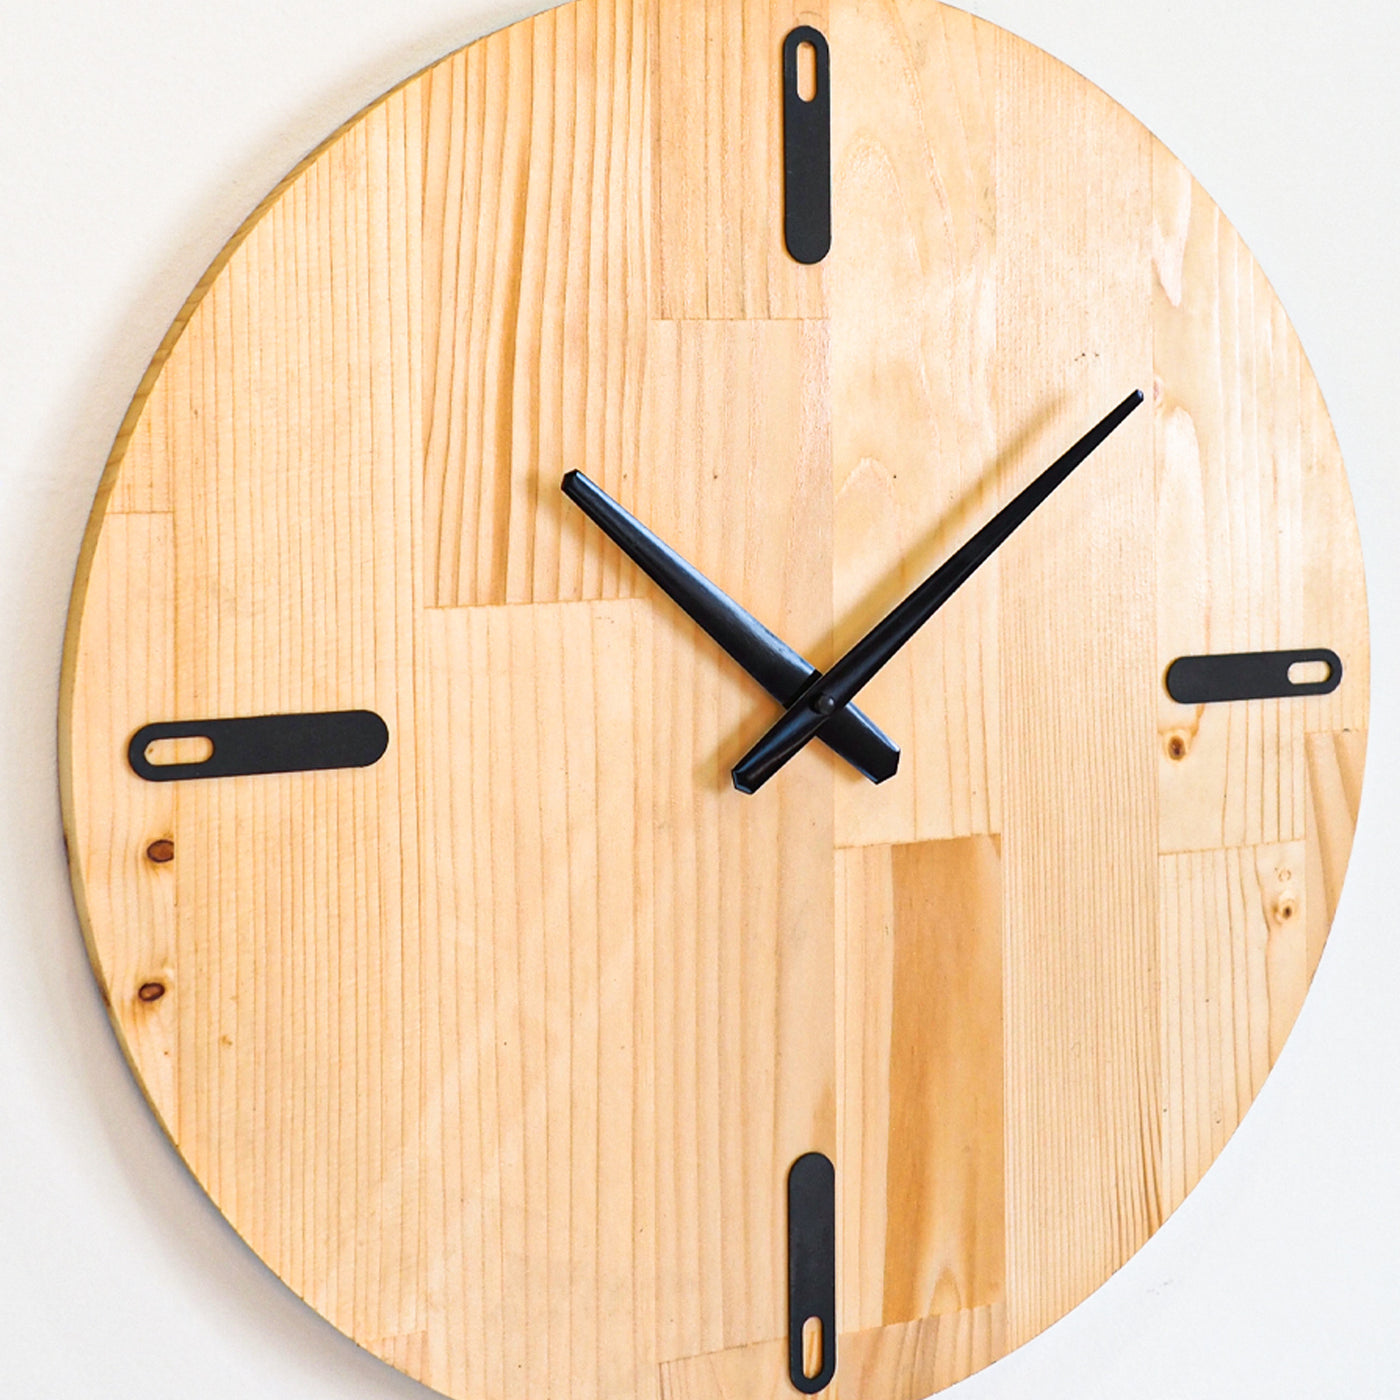 Nature Wooden Wall Clock - APS118